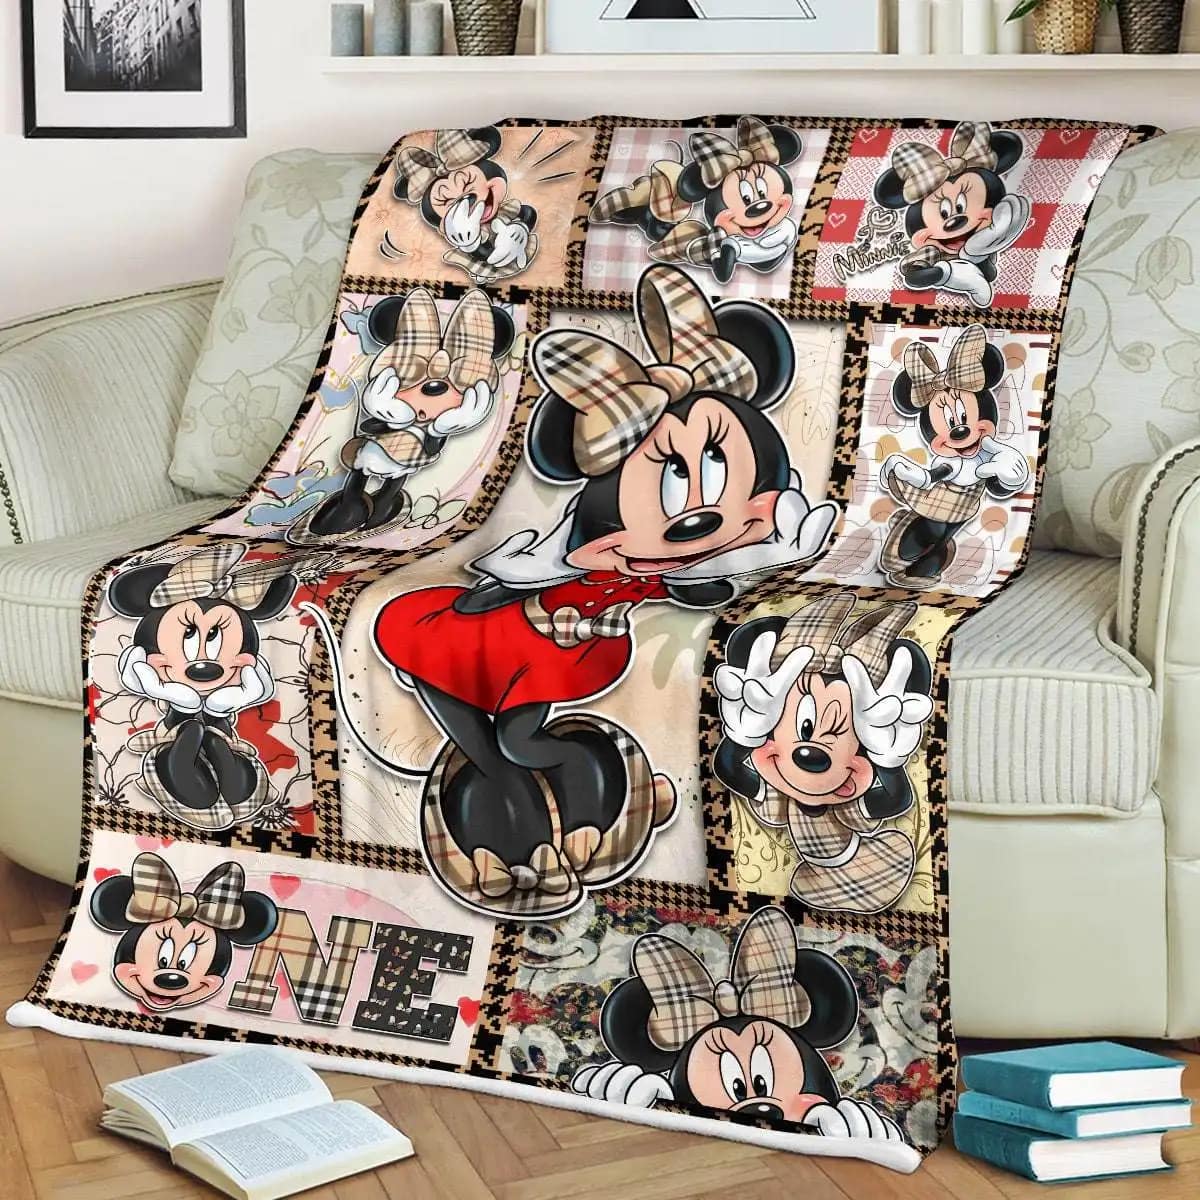 Minnie Mouse Plaid Disney Inspired Soft Cozy Comfy Bedroom Livingroom Office Home Decoration Fleece Blanket